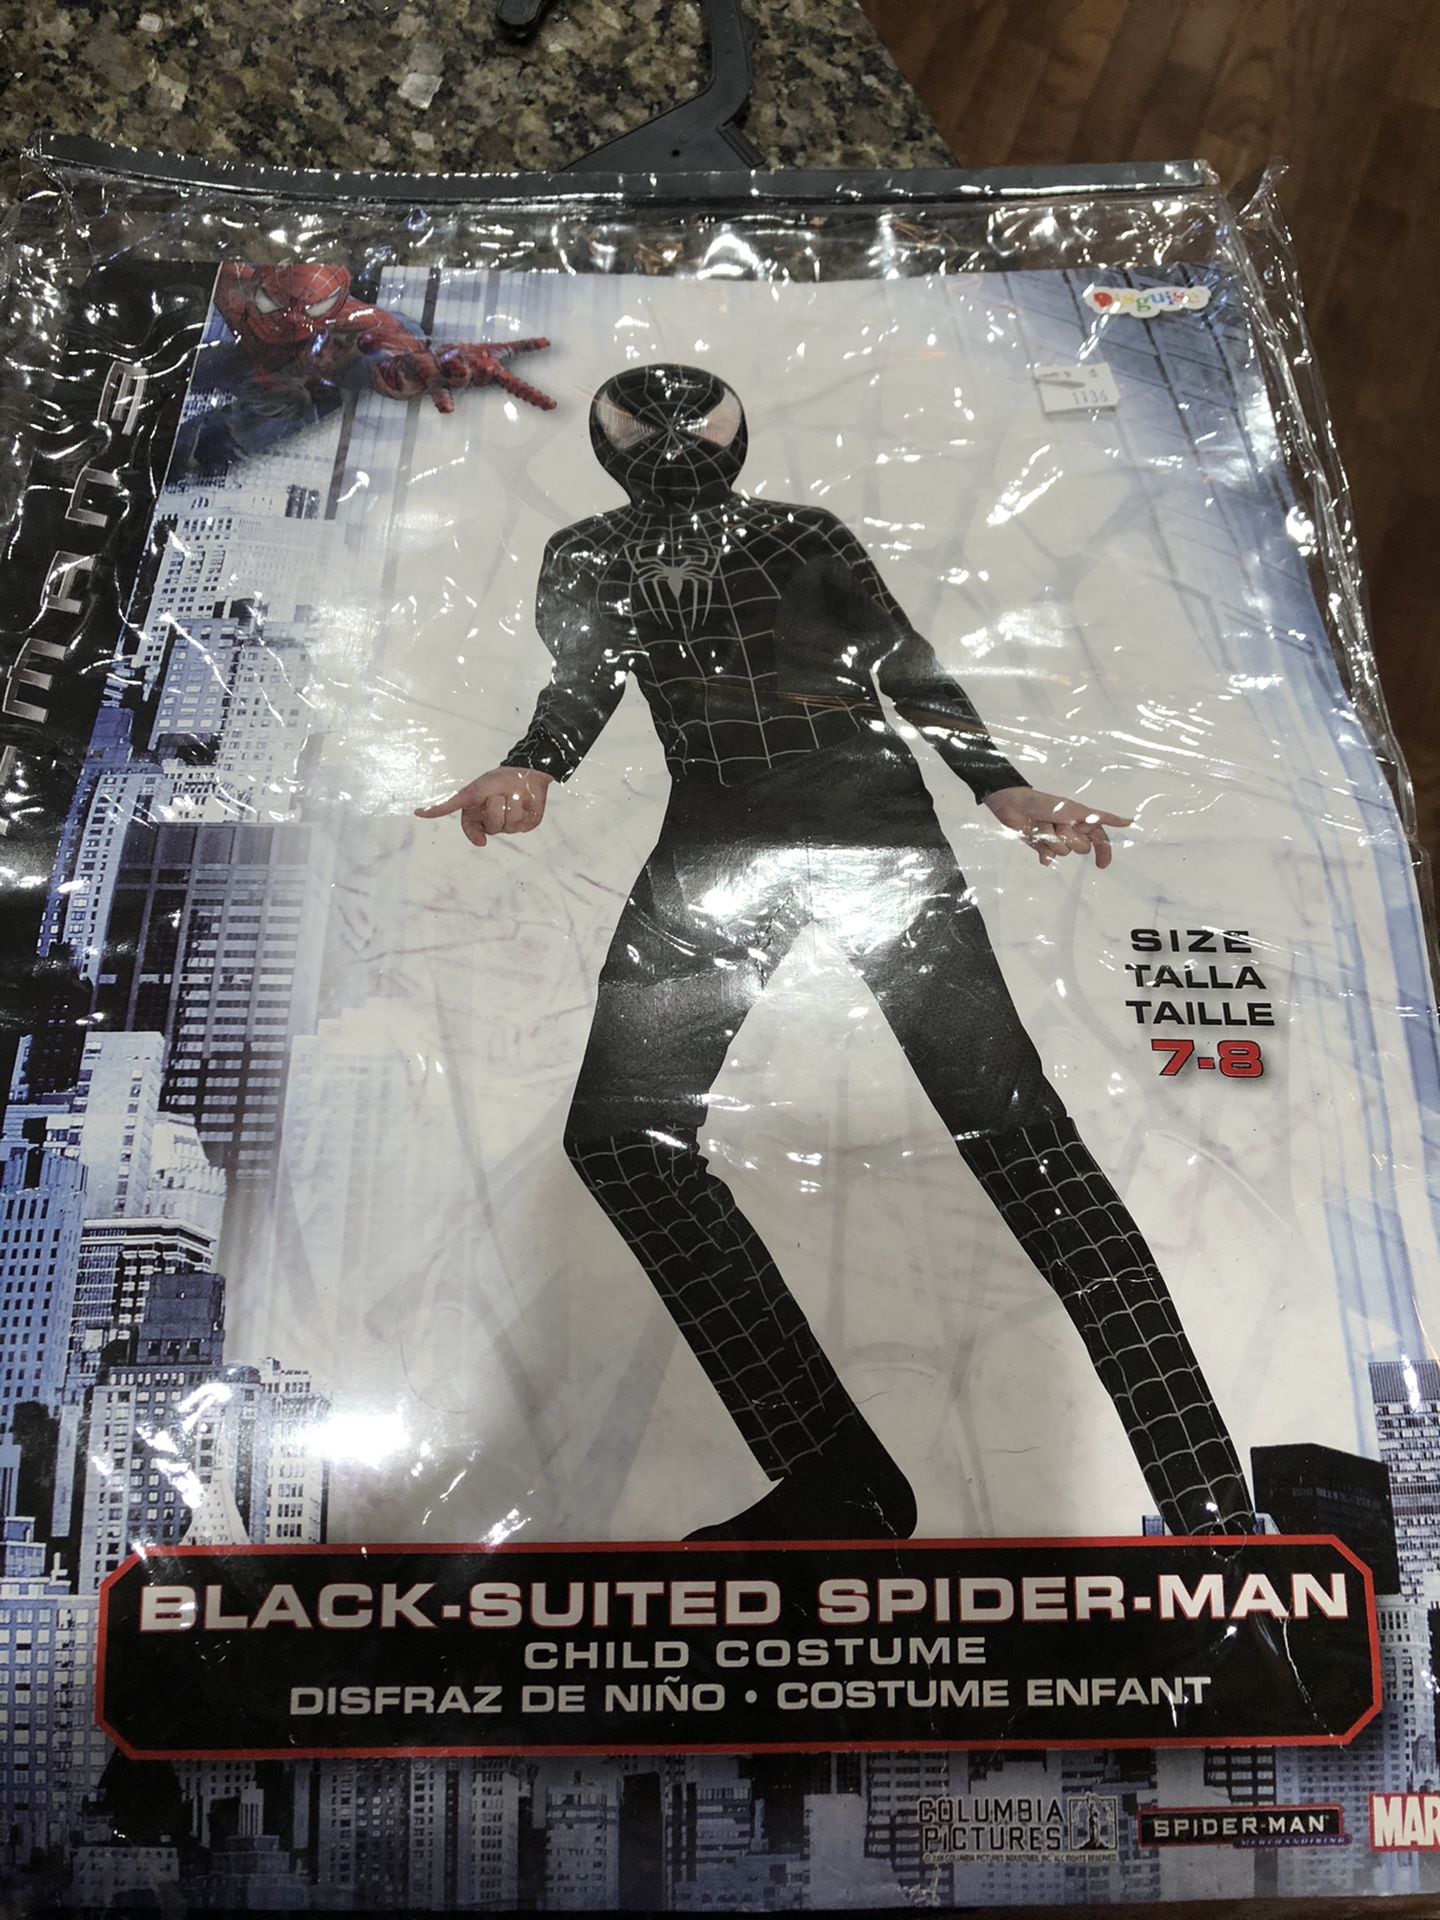 Black Spider-Man Costume